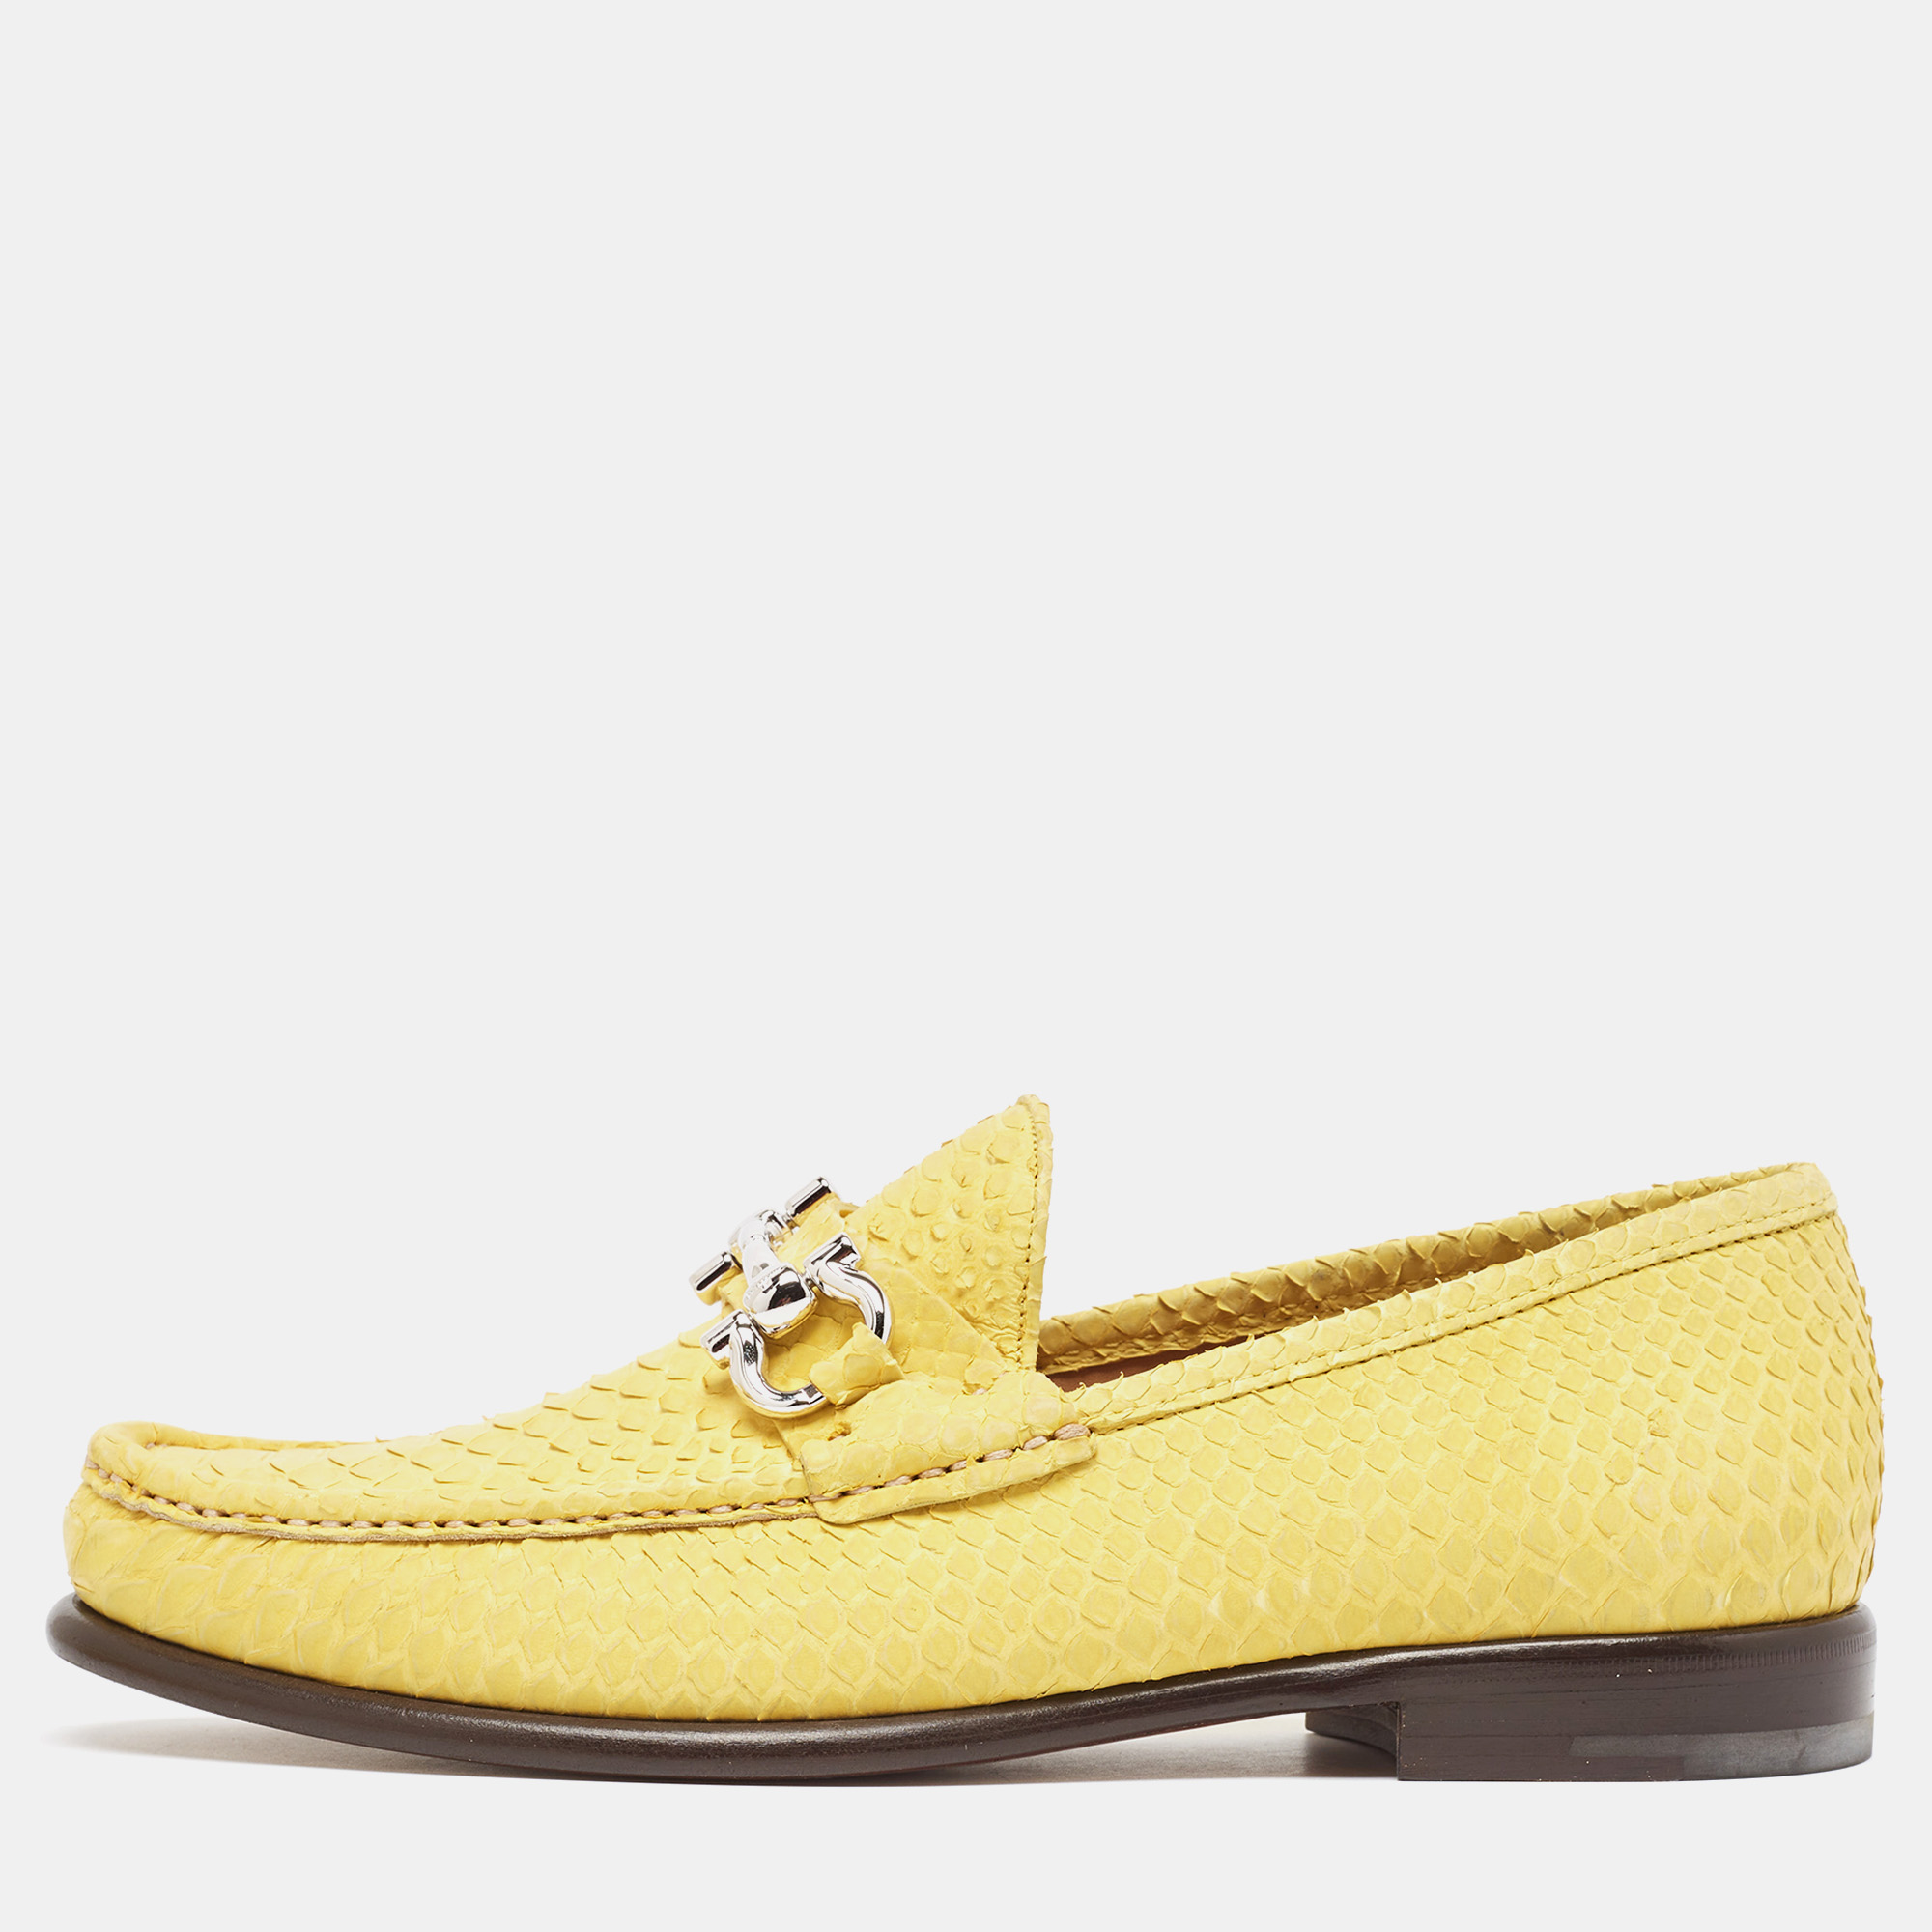 Salvatore ferragamo yellow python mason loafers size 41